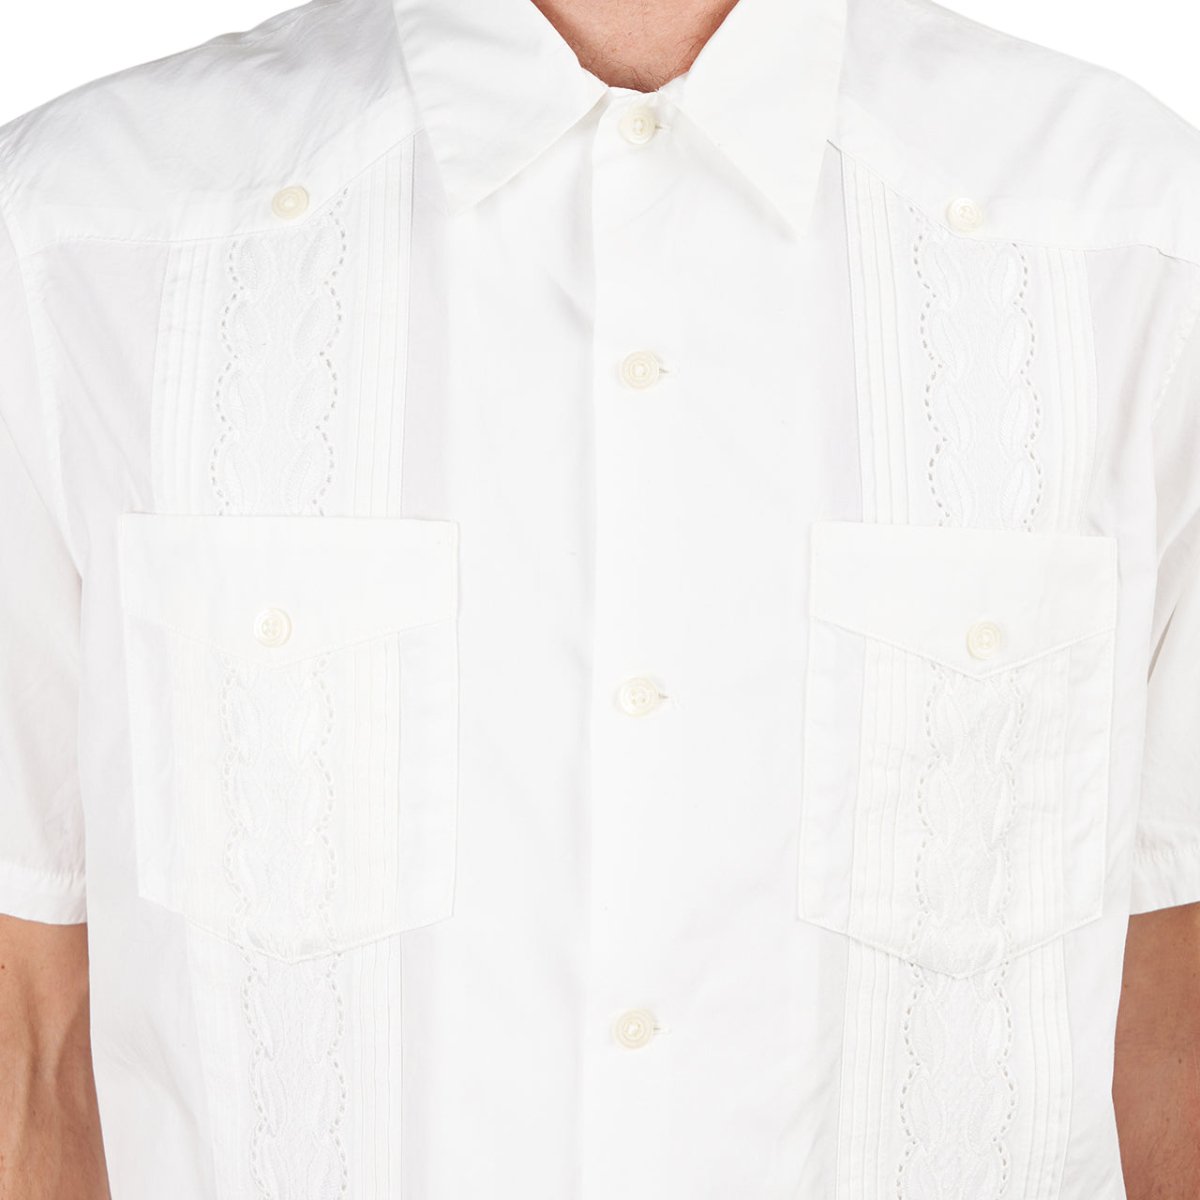 Neighborhood Habana / C-Shirt SS (Weiß)  - Allike Store